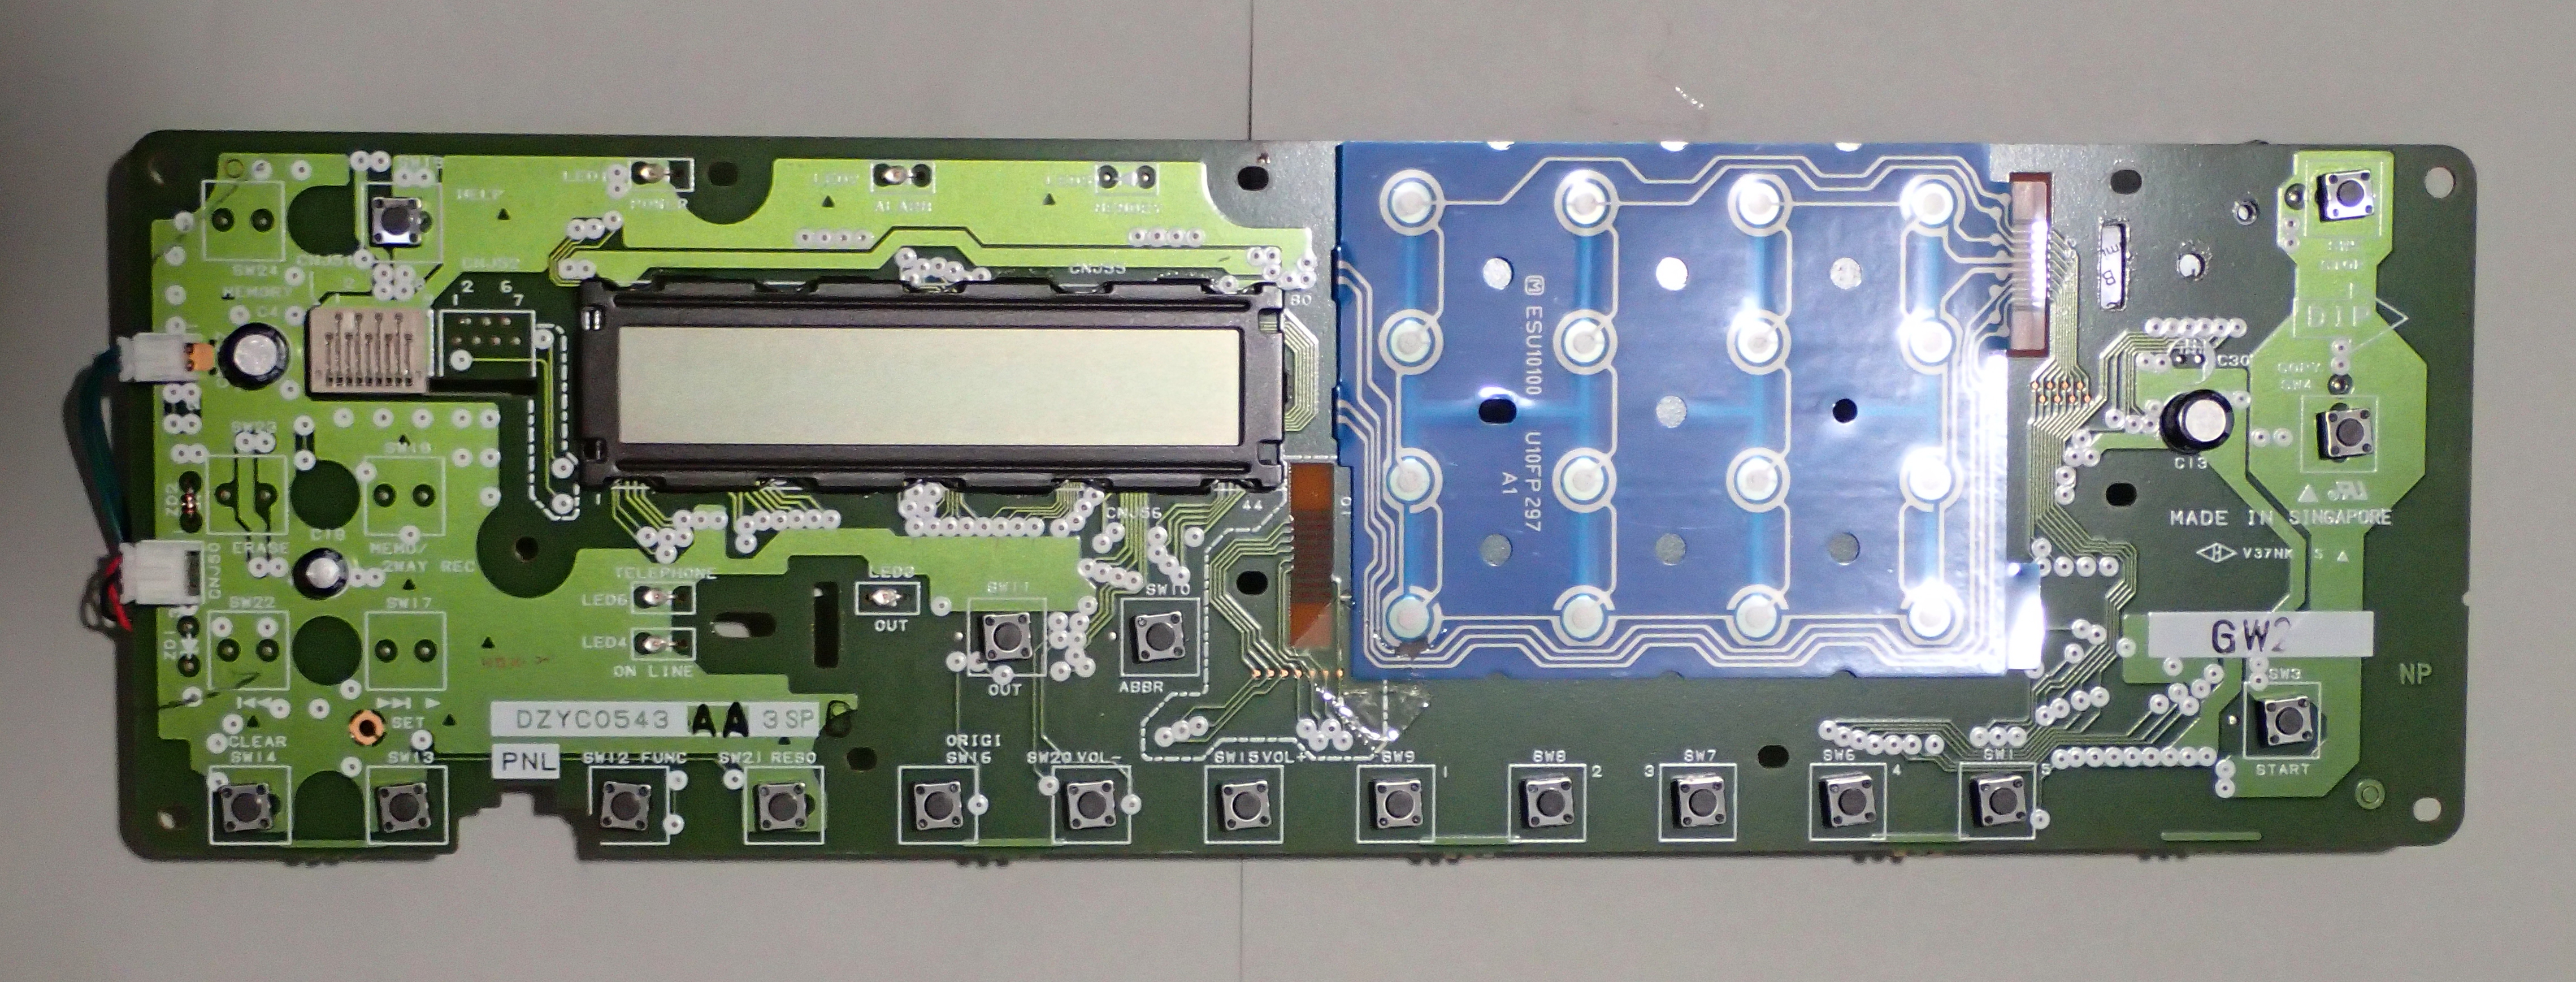 UF-V40 LCD panel front